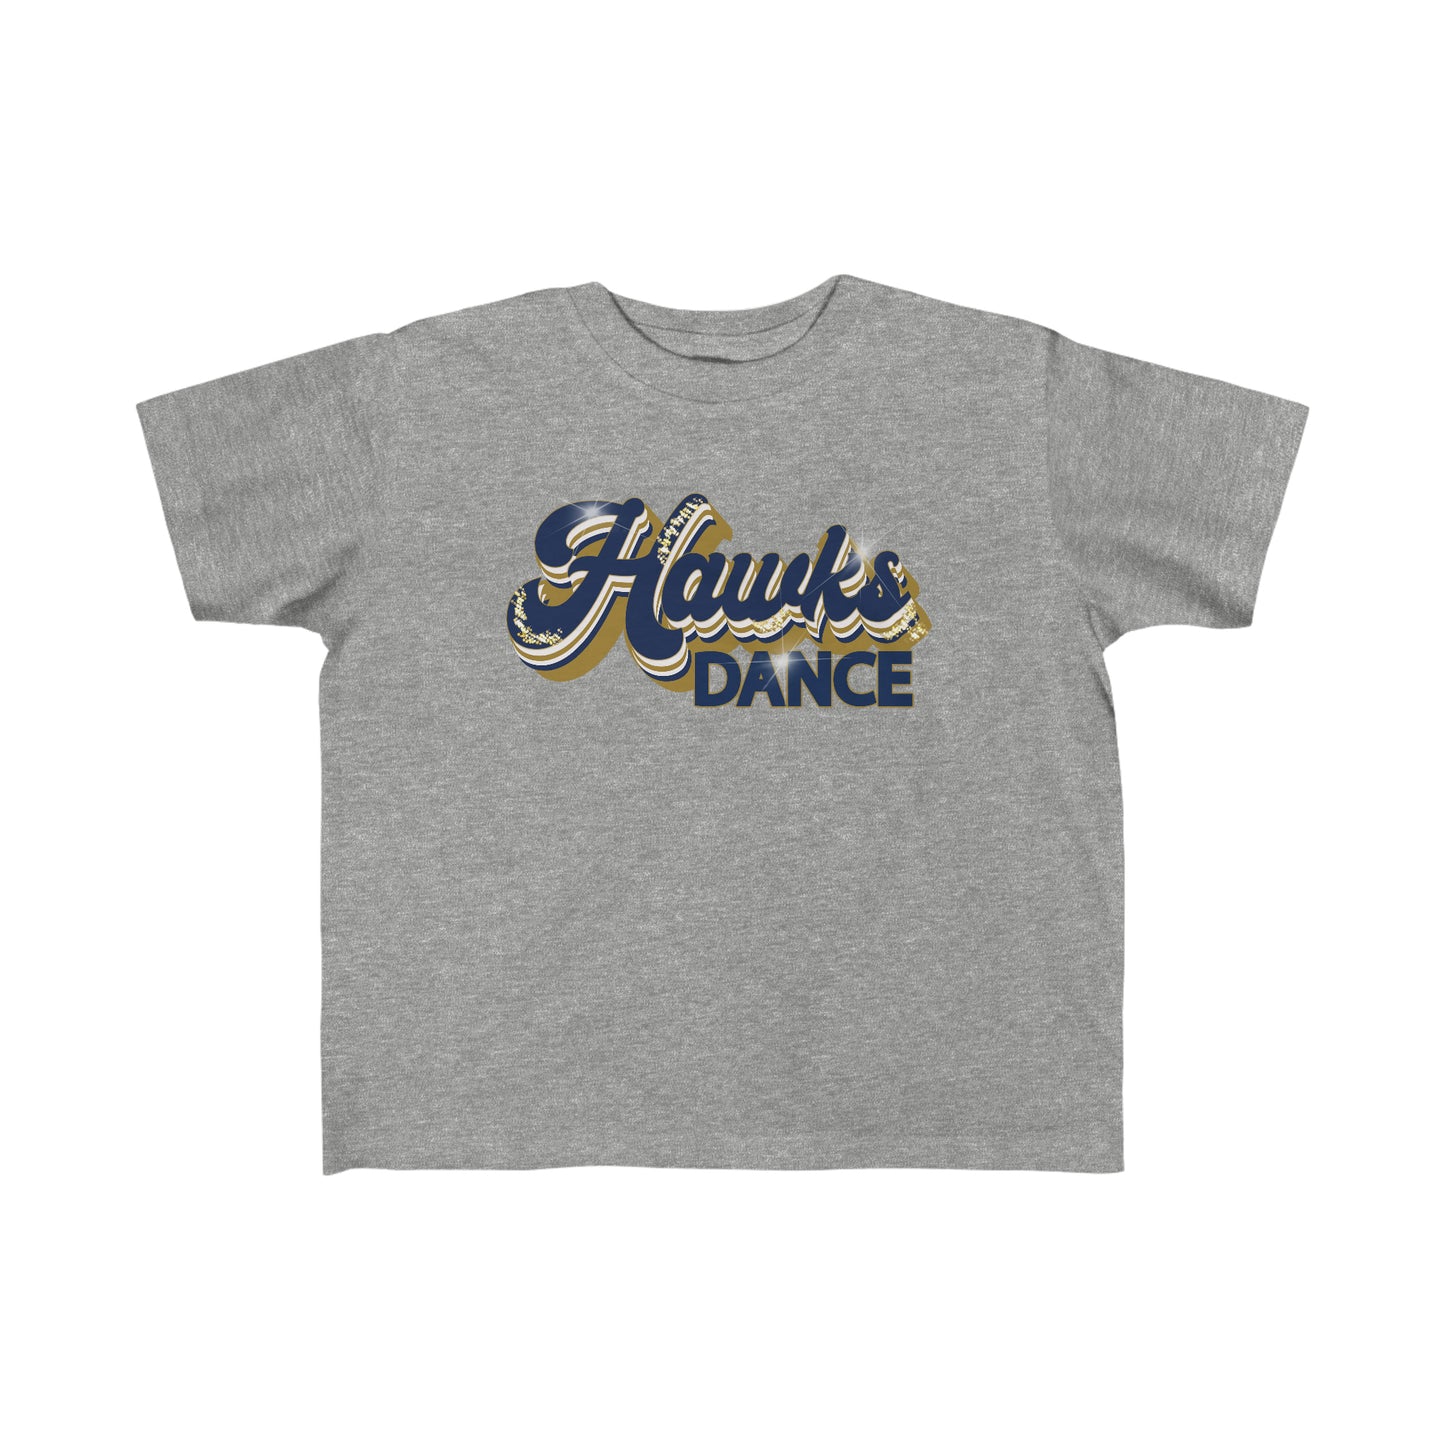 Hawks Dance Toddler Shirt